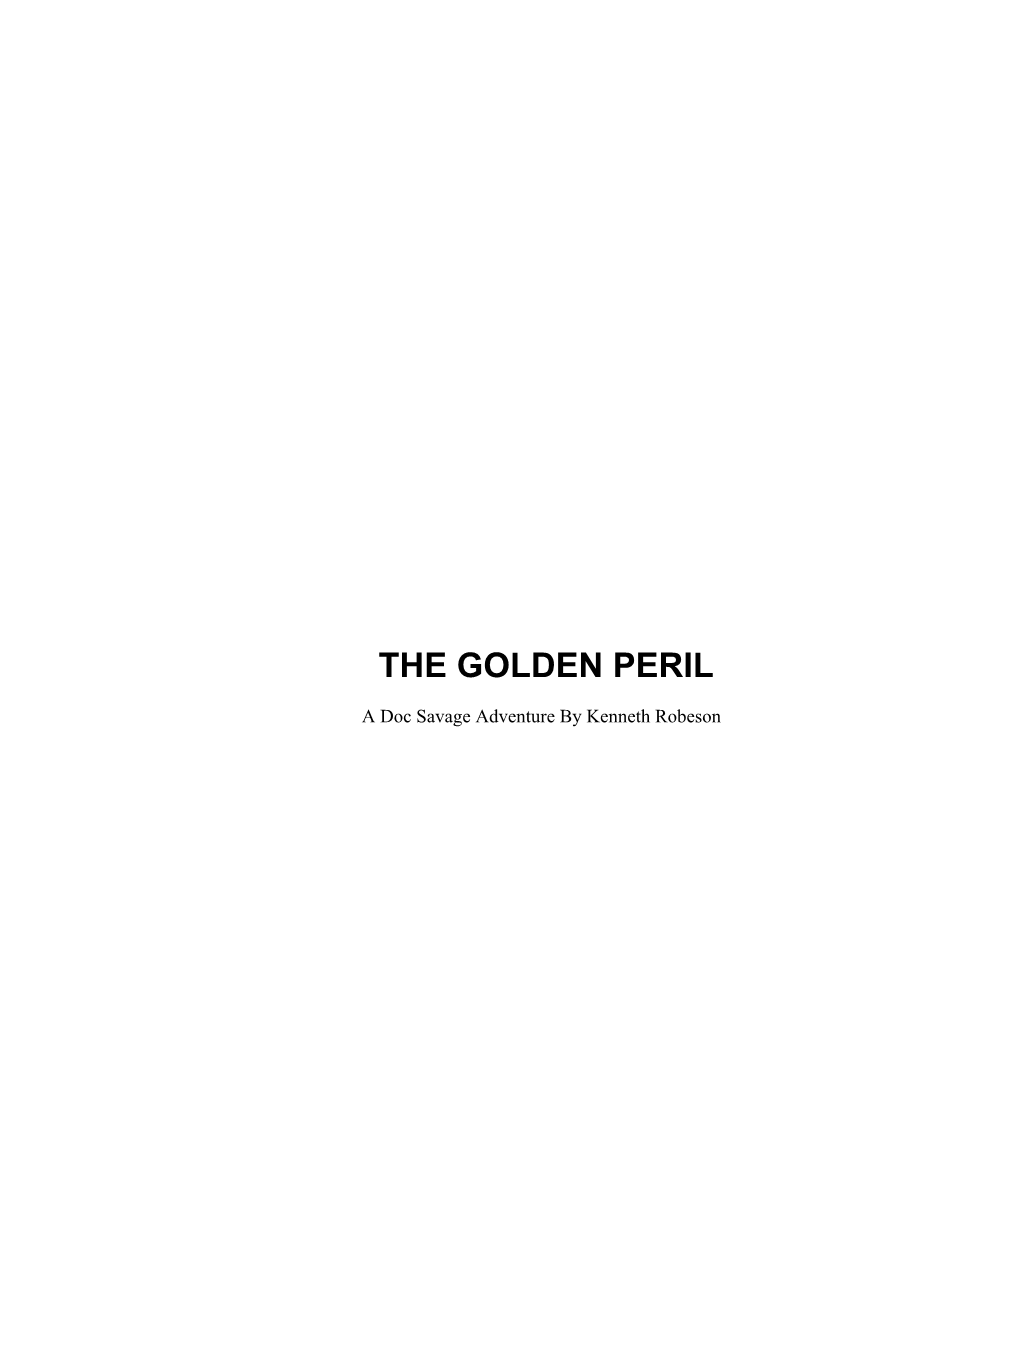 The Golden Peril